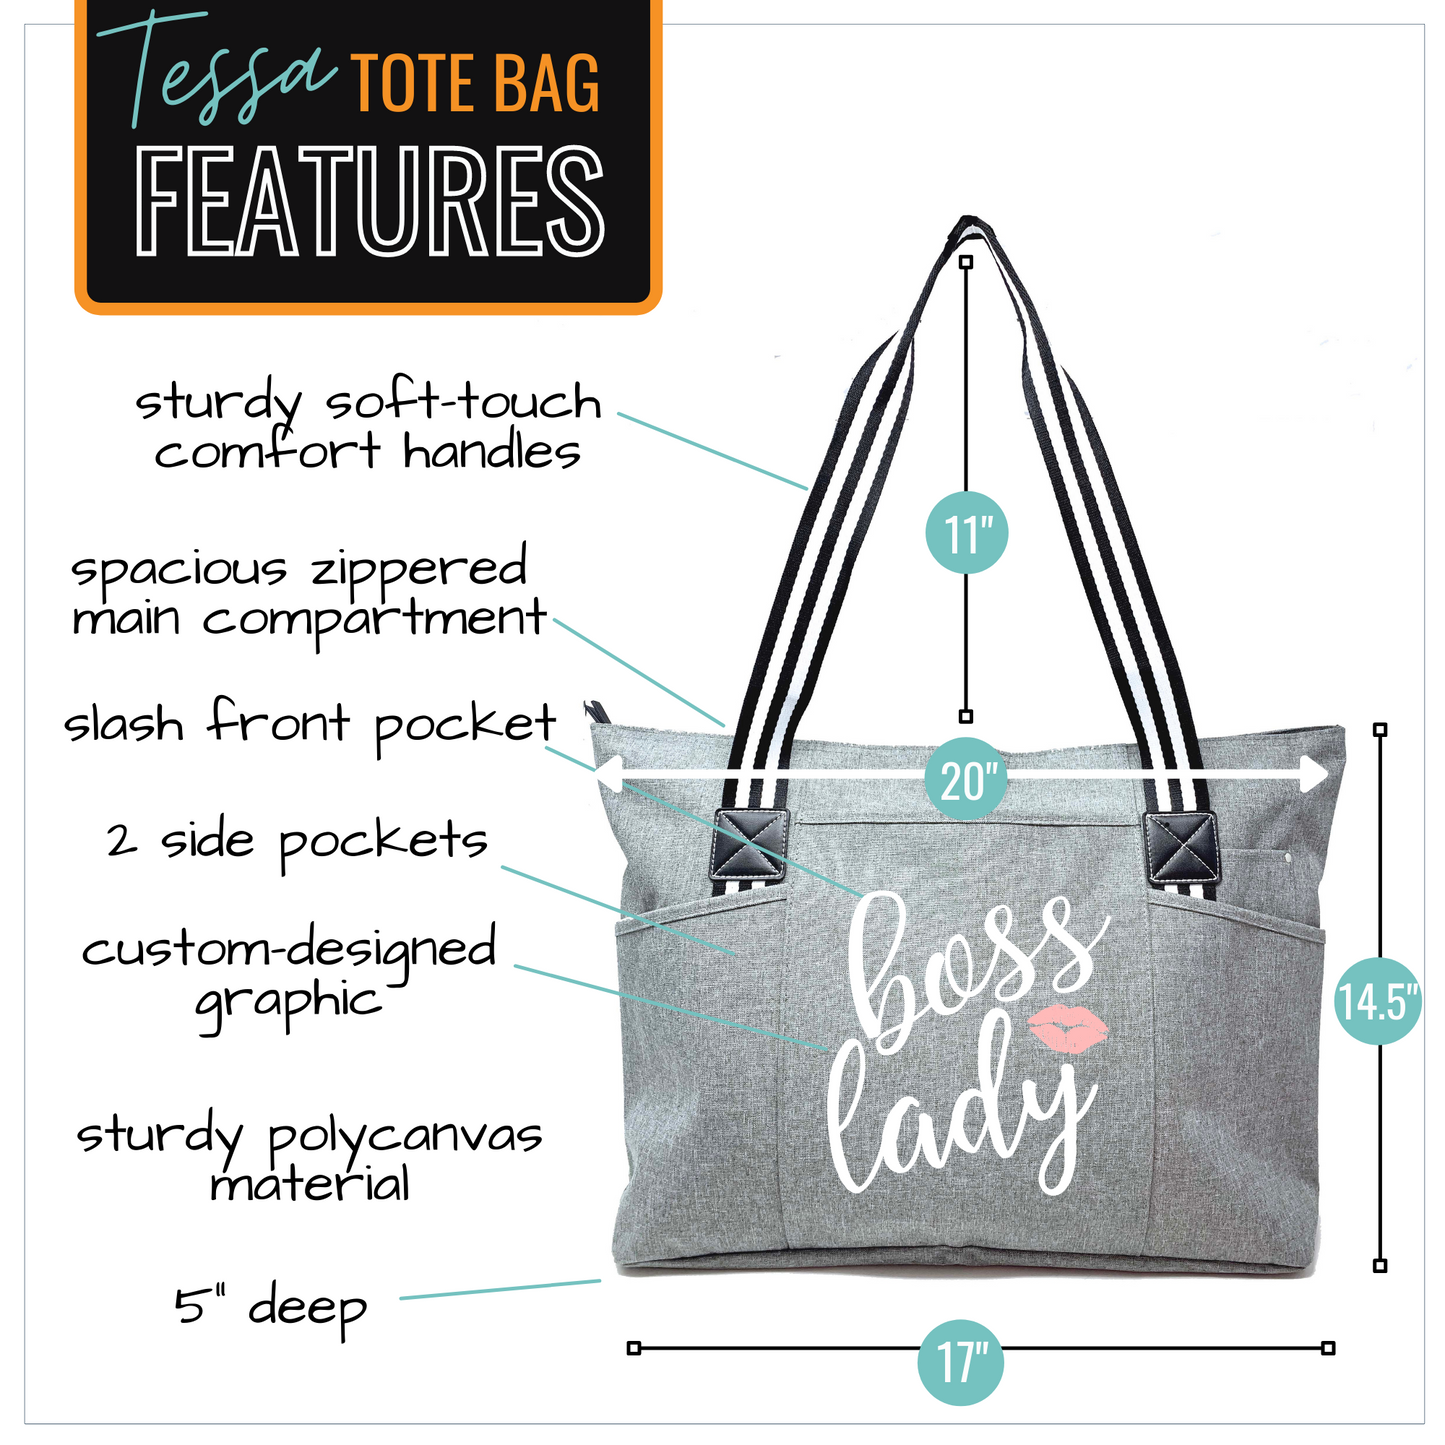 Boss Lady Tessa Gray Tote Bag for Bosses - Outlet Deal Utah